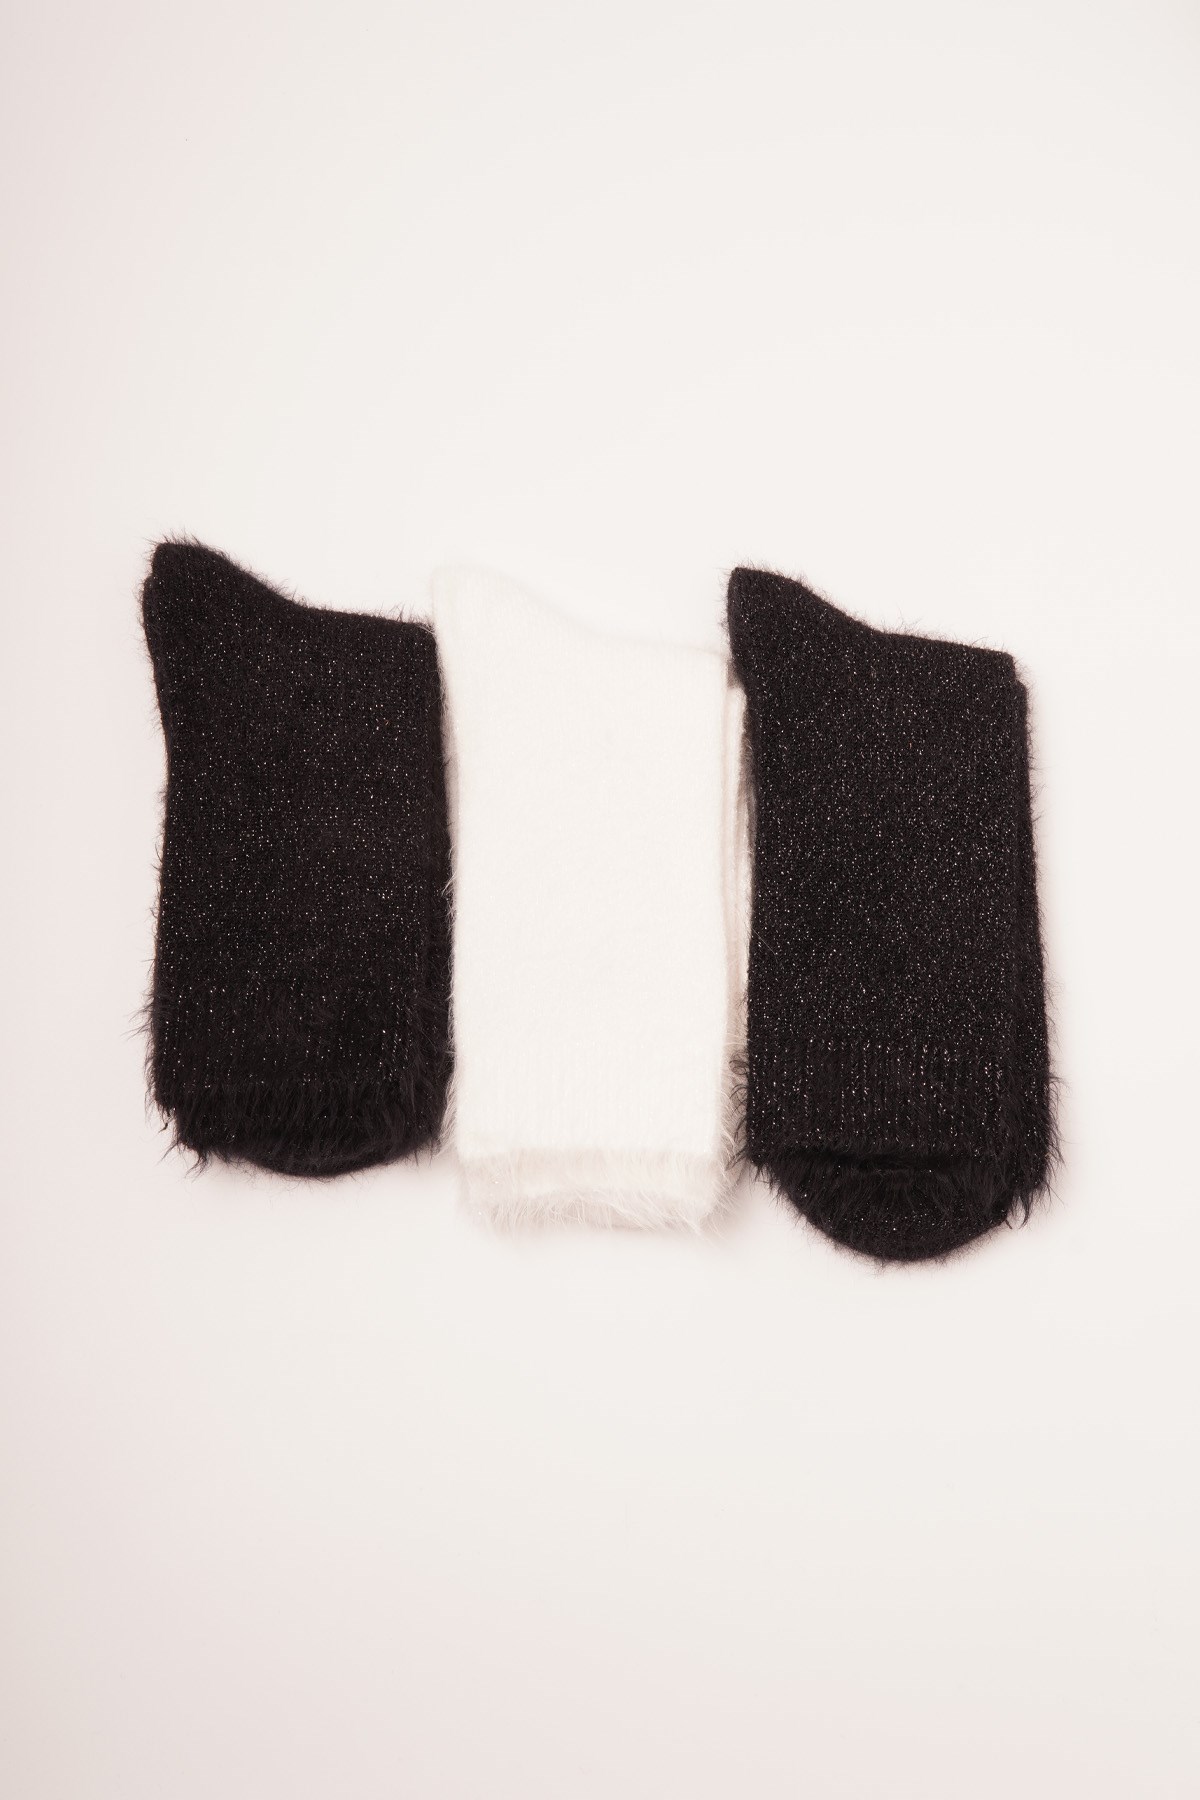 Katia and Bony 3 lü Paket Angora Kadın Soket Çorap Siyah/Beyaz. 3